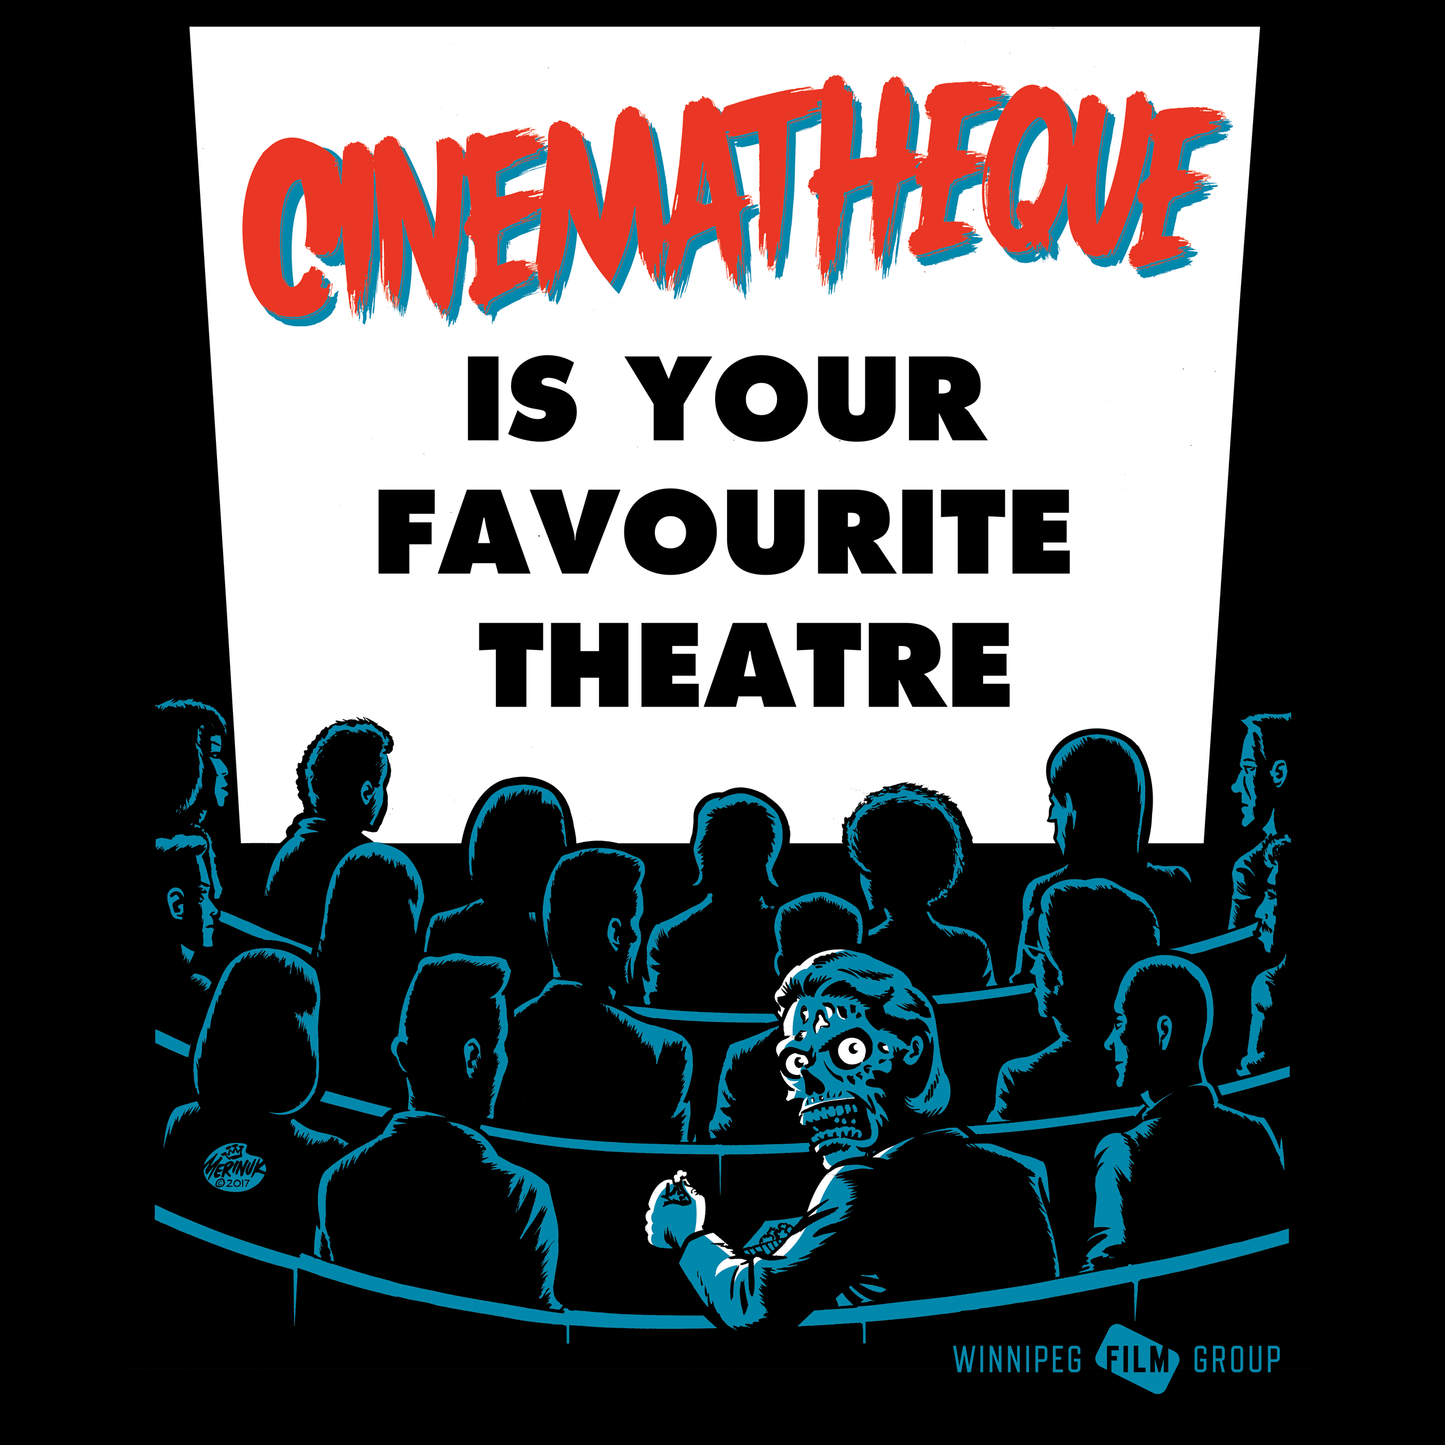 Obey Cinematheque T-Shirt